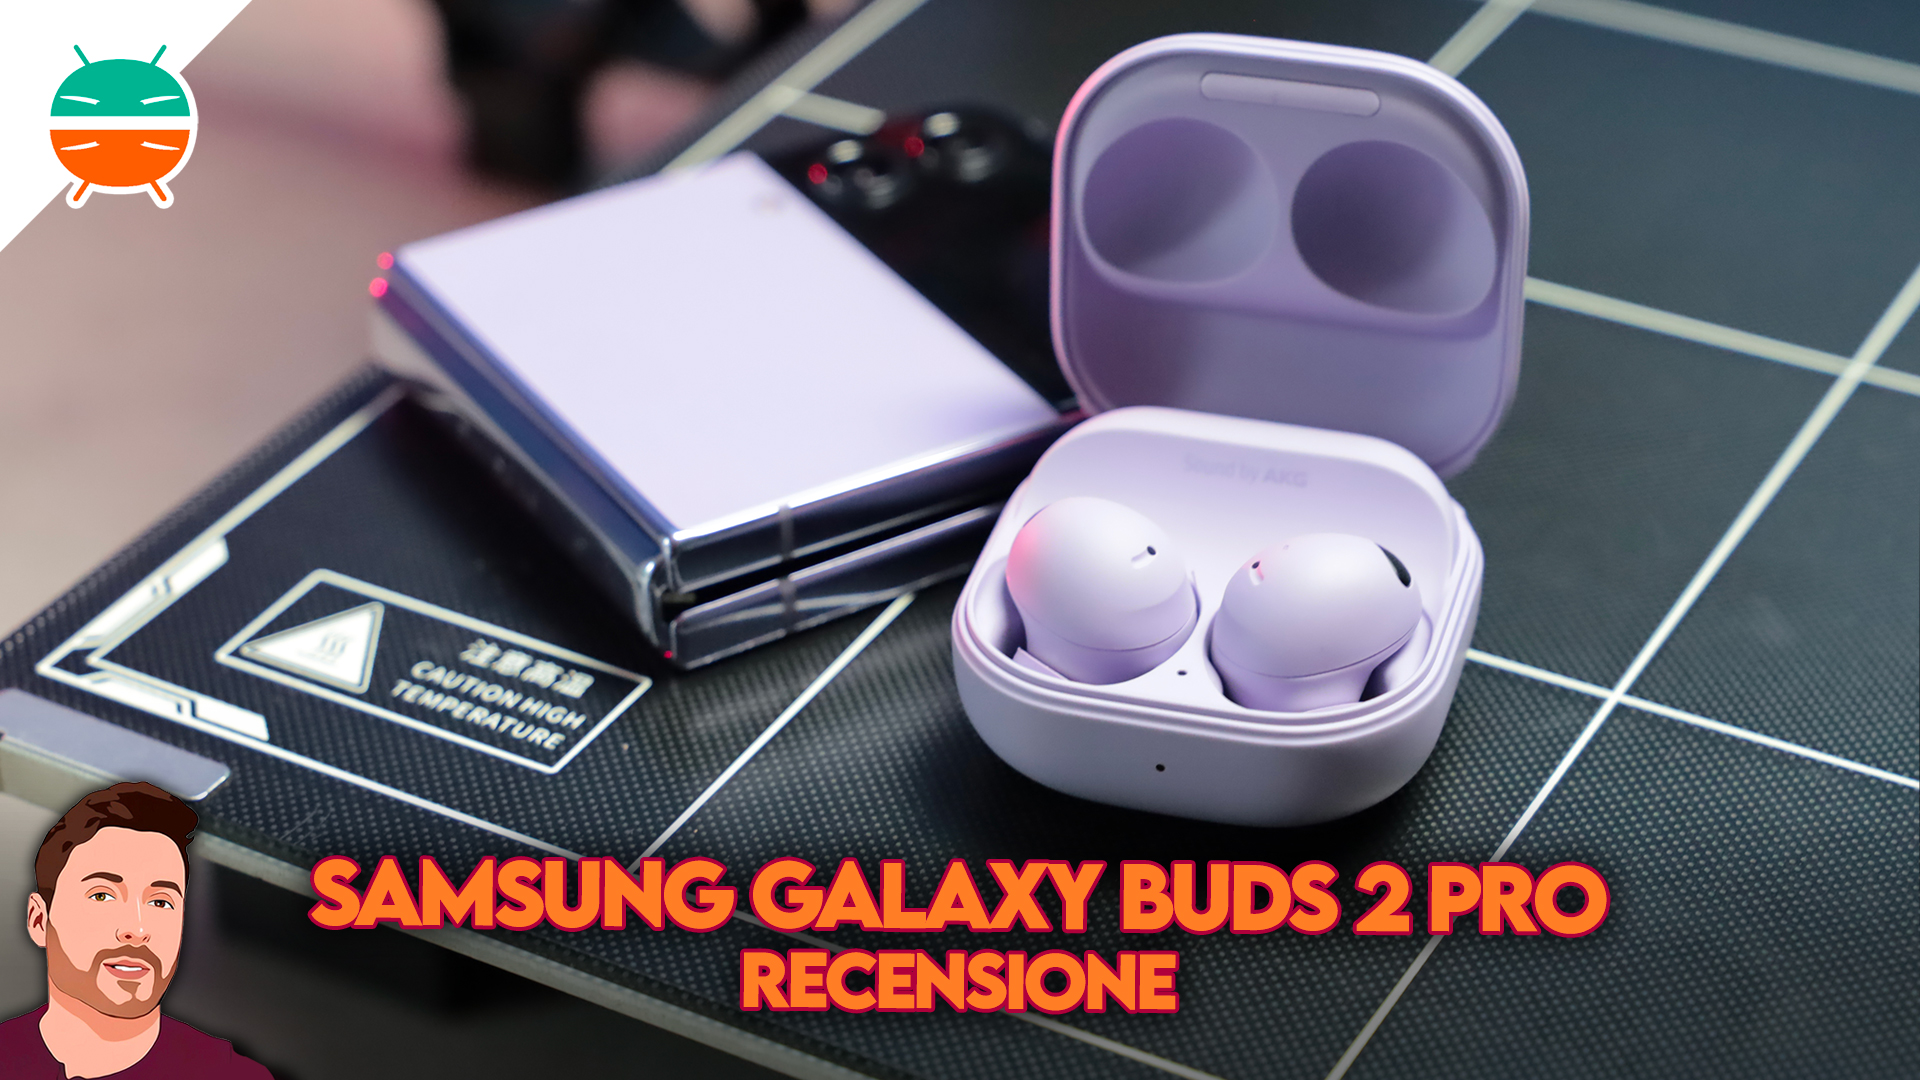 Samsung Galaxy Buds 2 Pro review: TOP audio quality - GizChina.it